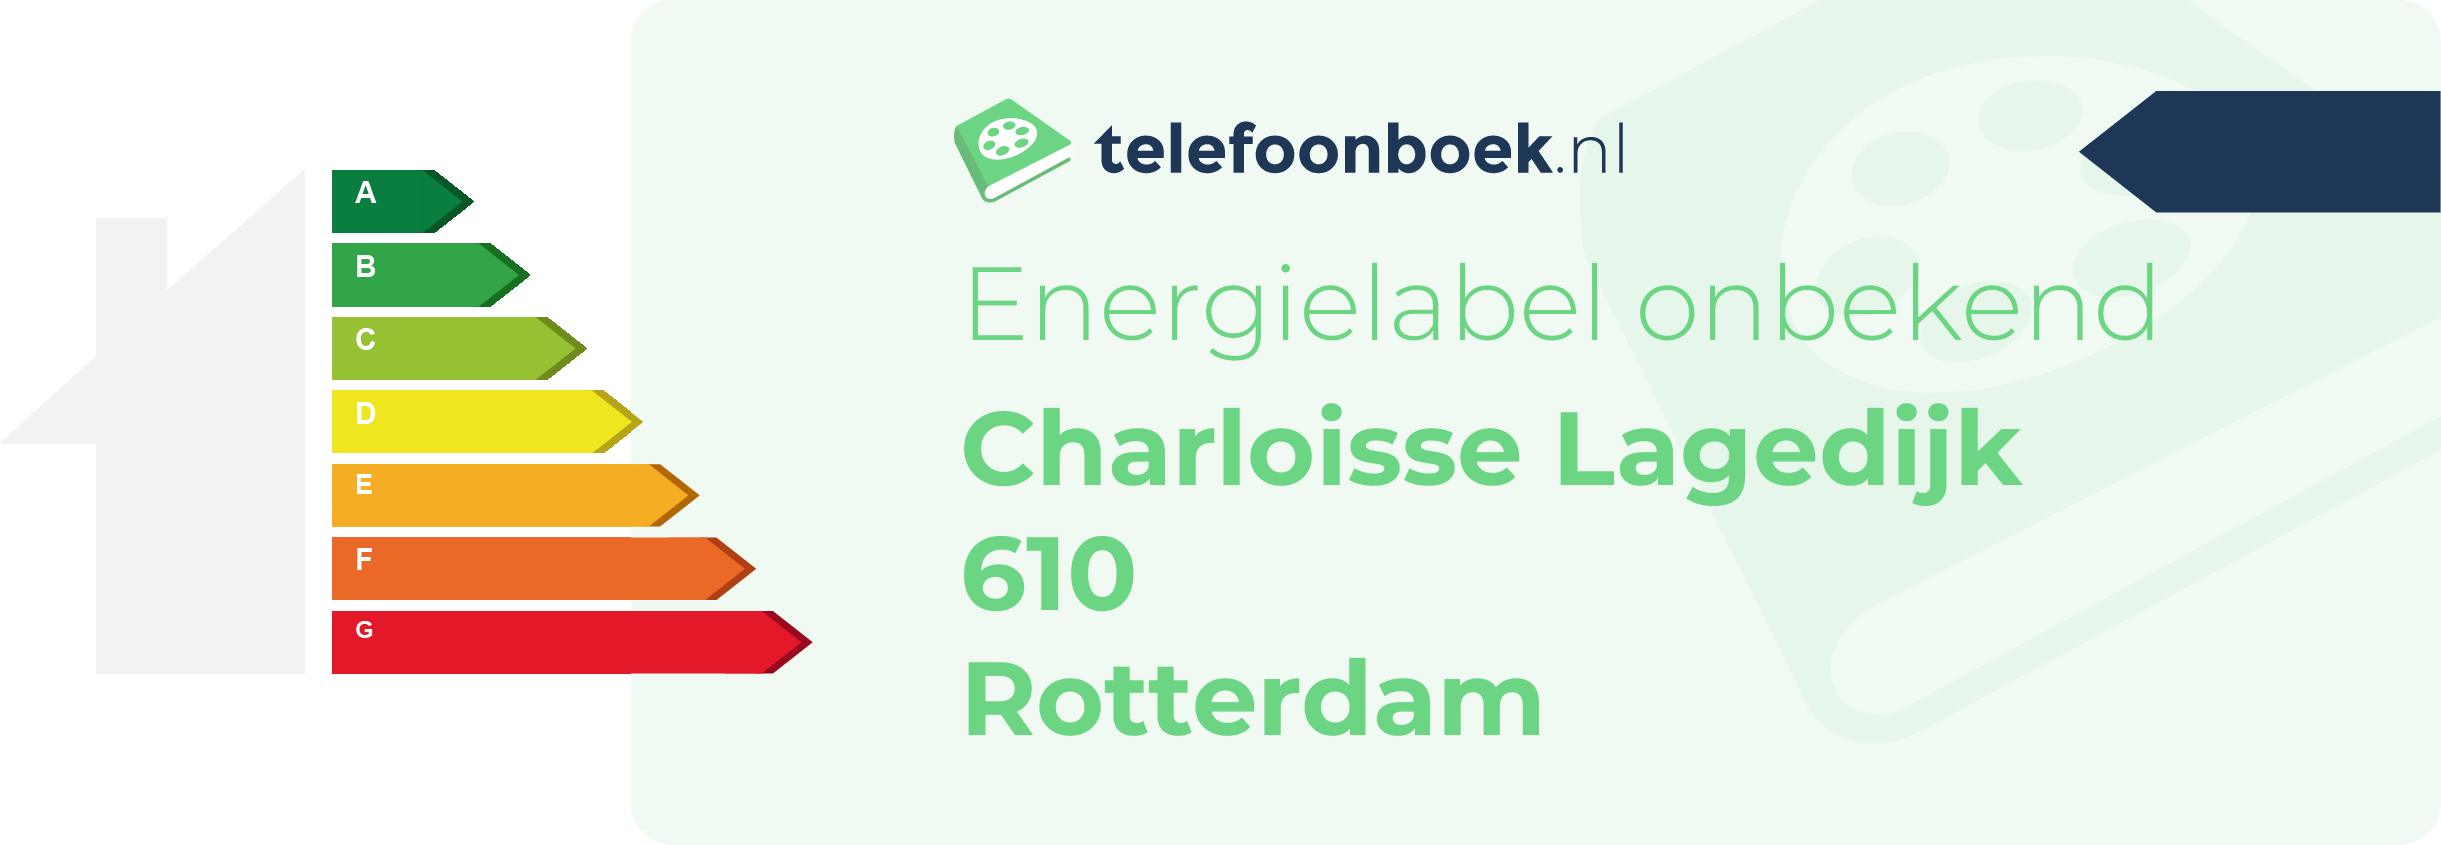 Energielabel Charloisse Lagedijk 610 Rotterdam